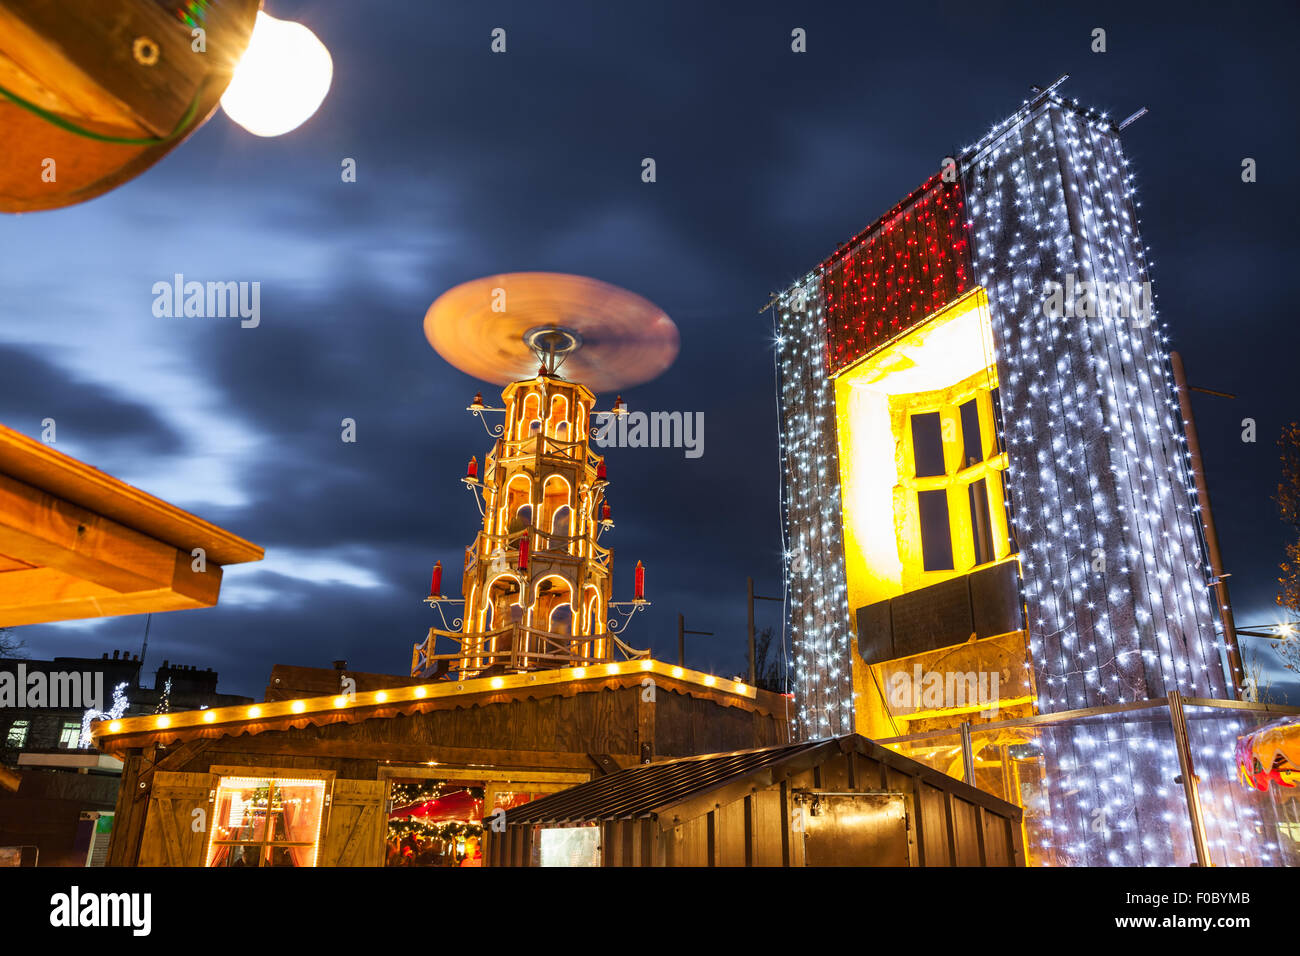 Christmas market illuminated at night in Galway, Ireland. Detail Stock Photo